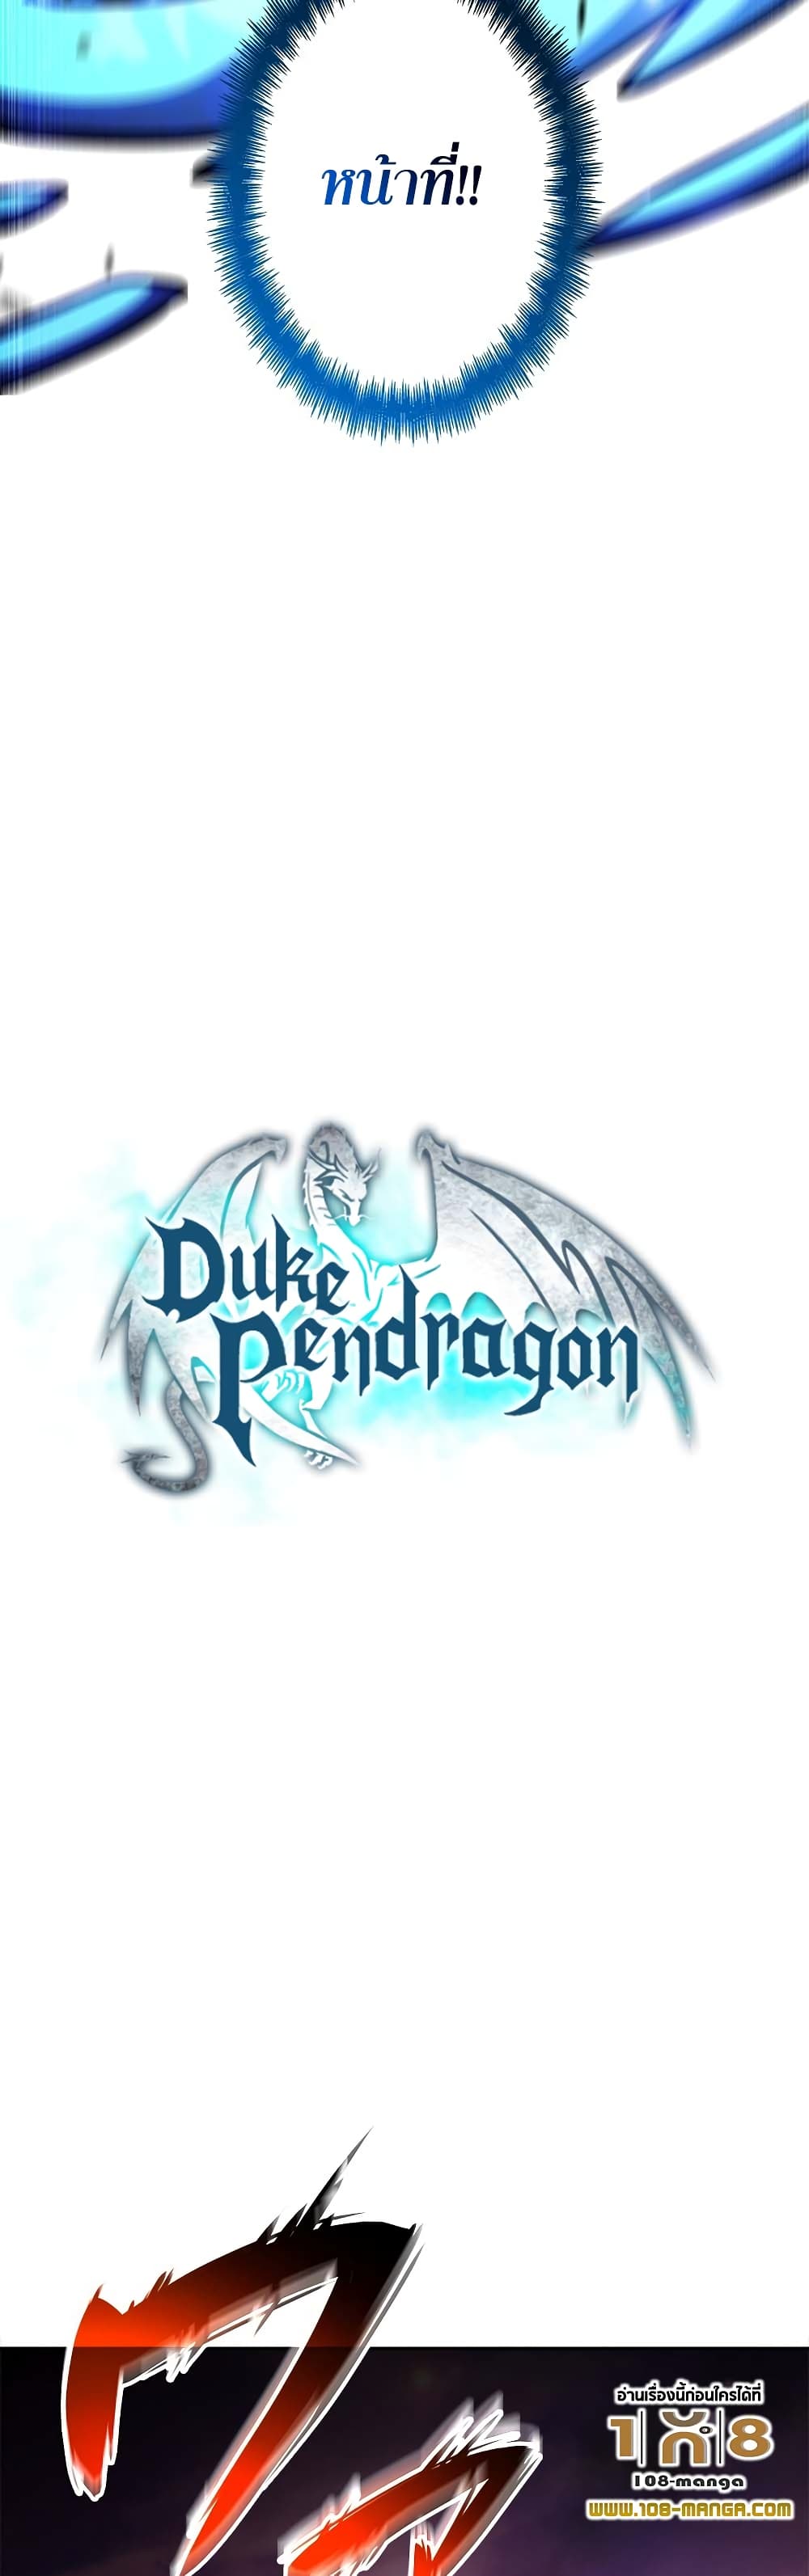 Duke Pendragon 71 10